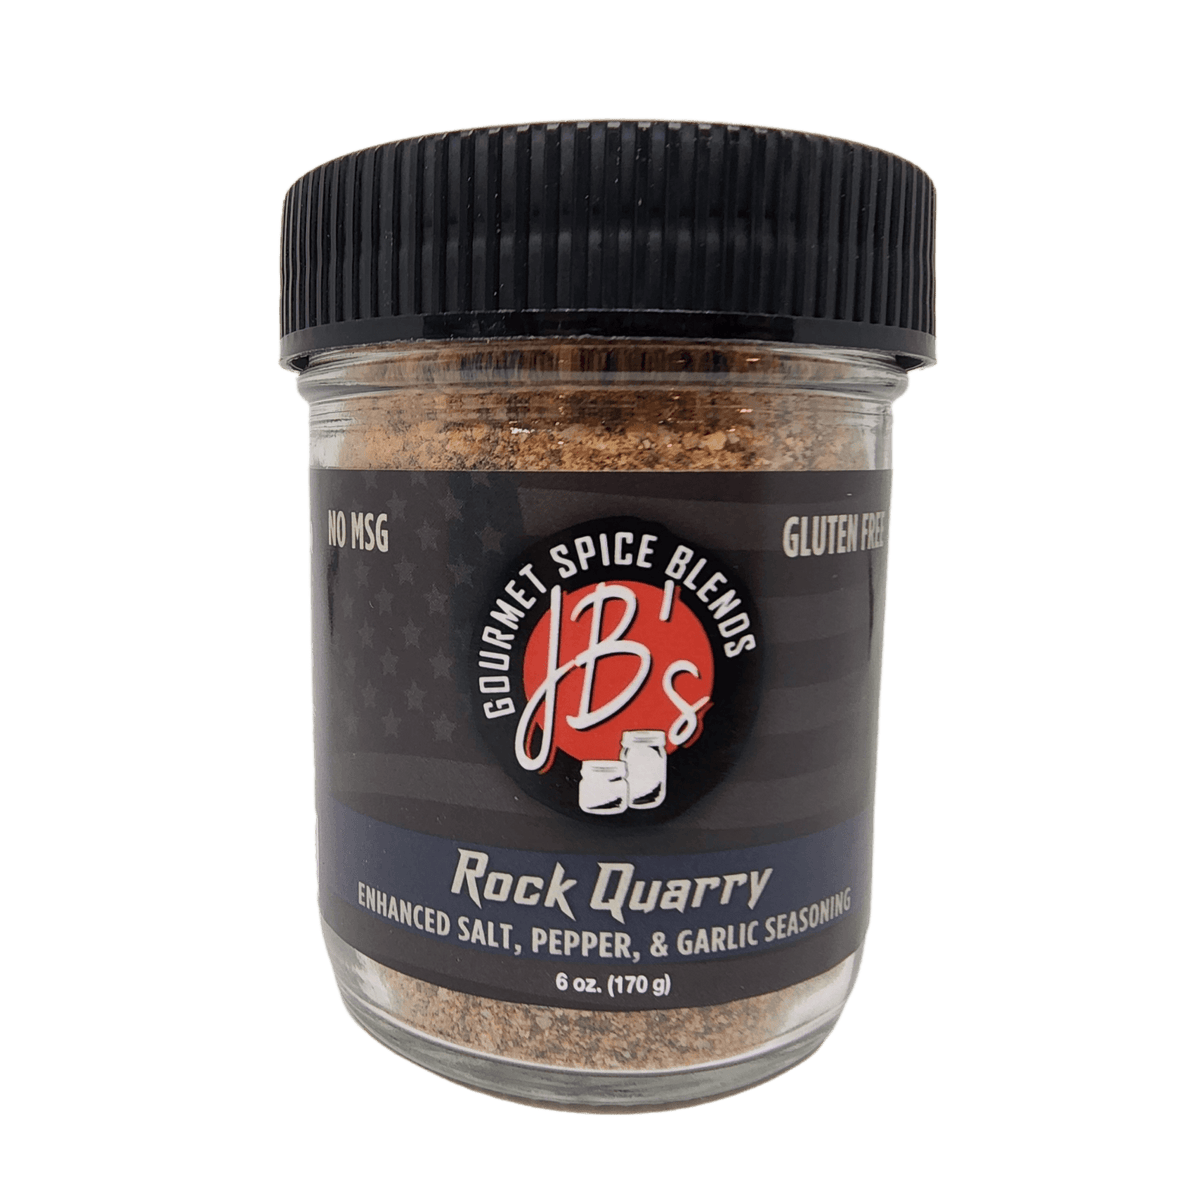 Wholesale Grey Salt Smoked Paprika - Salt Shaker for your store